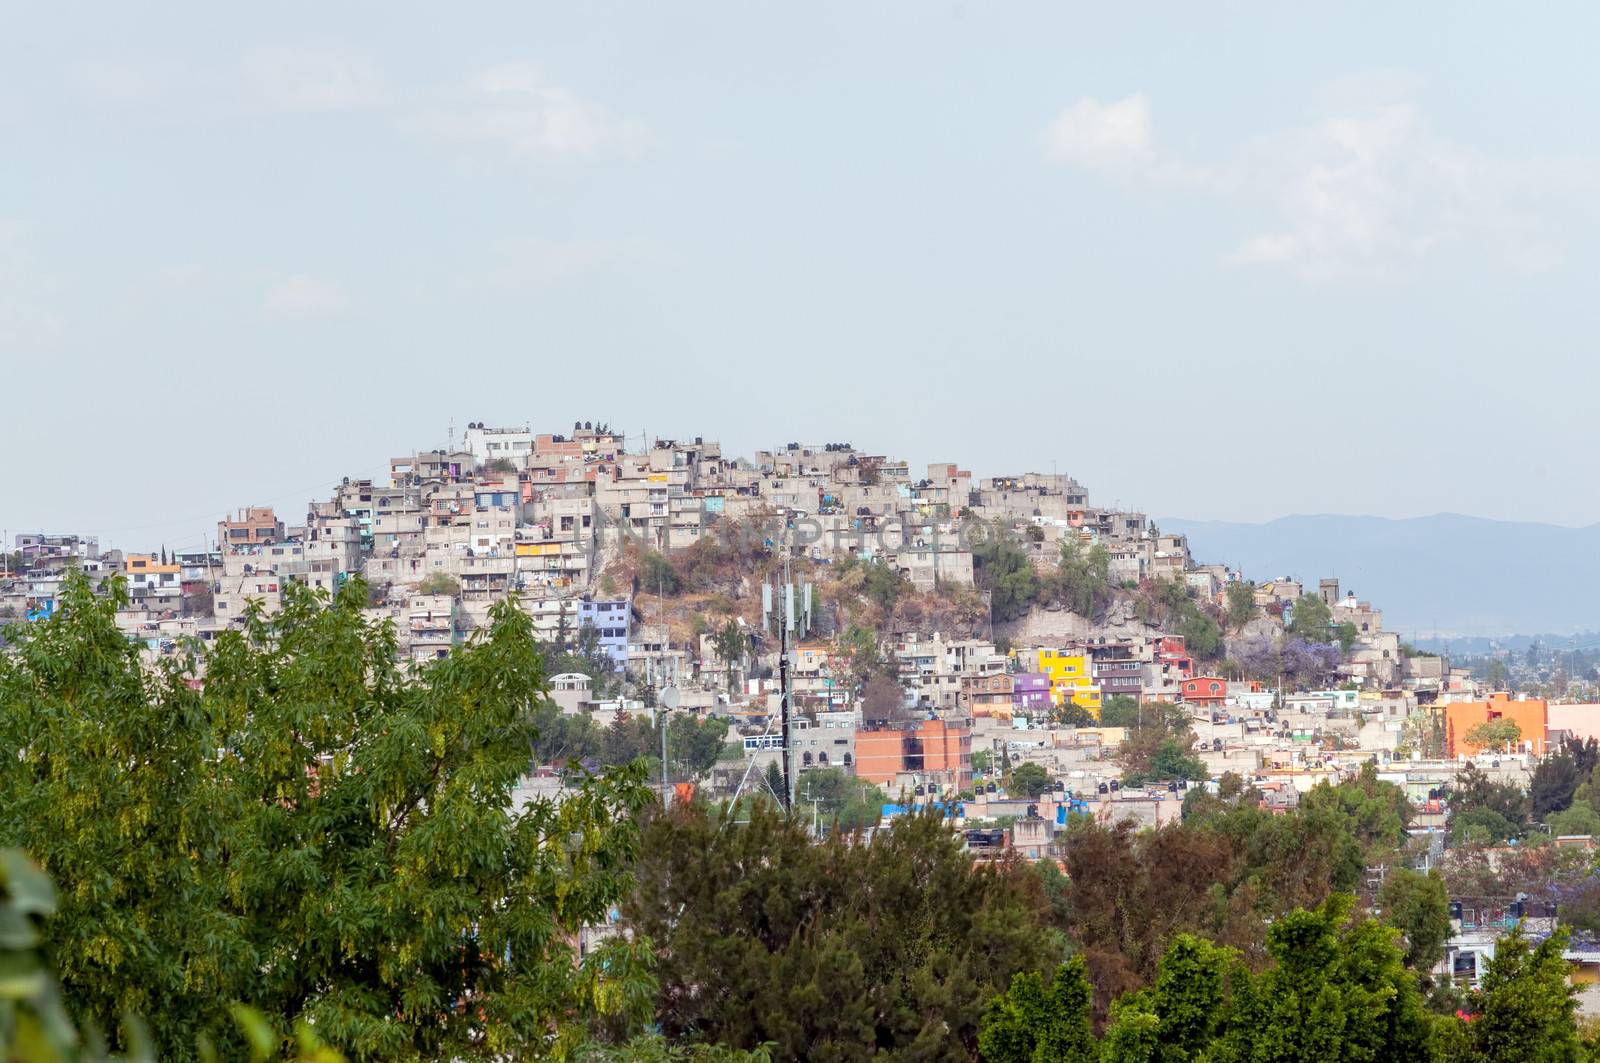 Mexico City Slum by jkraft5